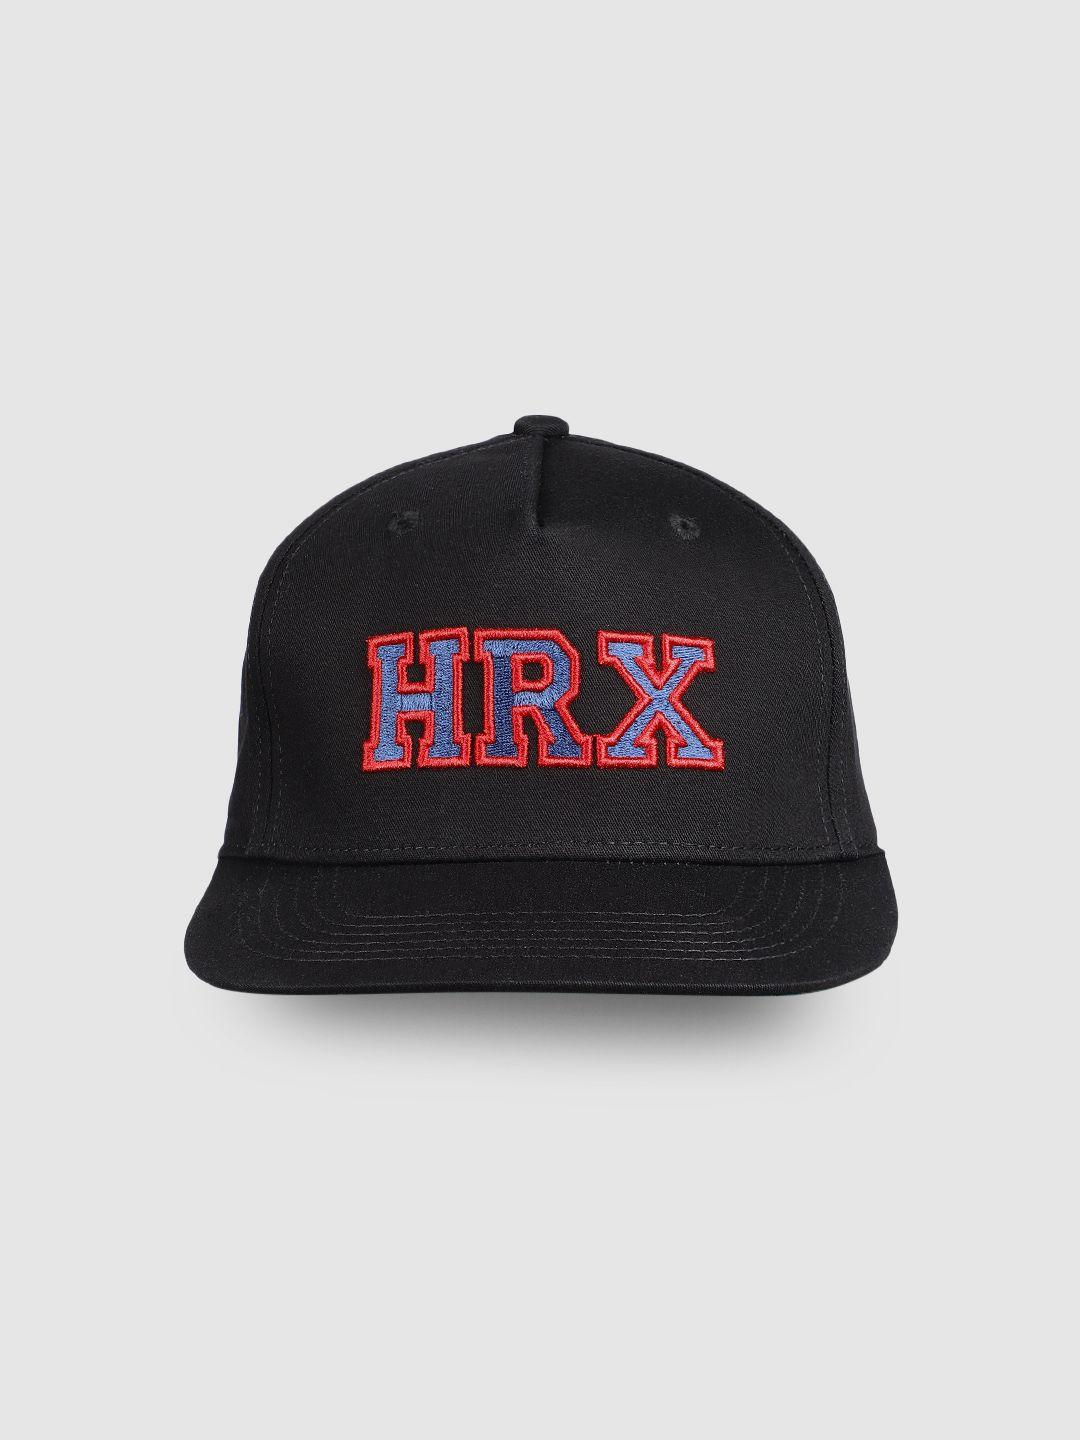 hrx by hrithik roshan unisex black embroidered snapback cap